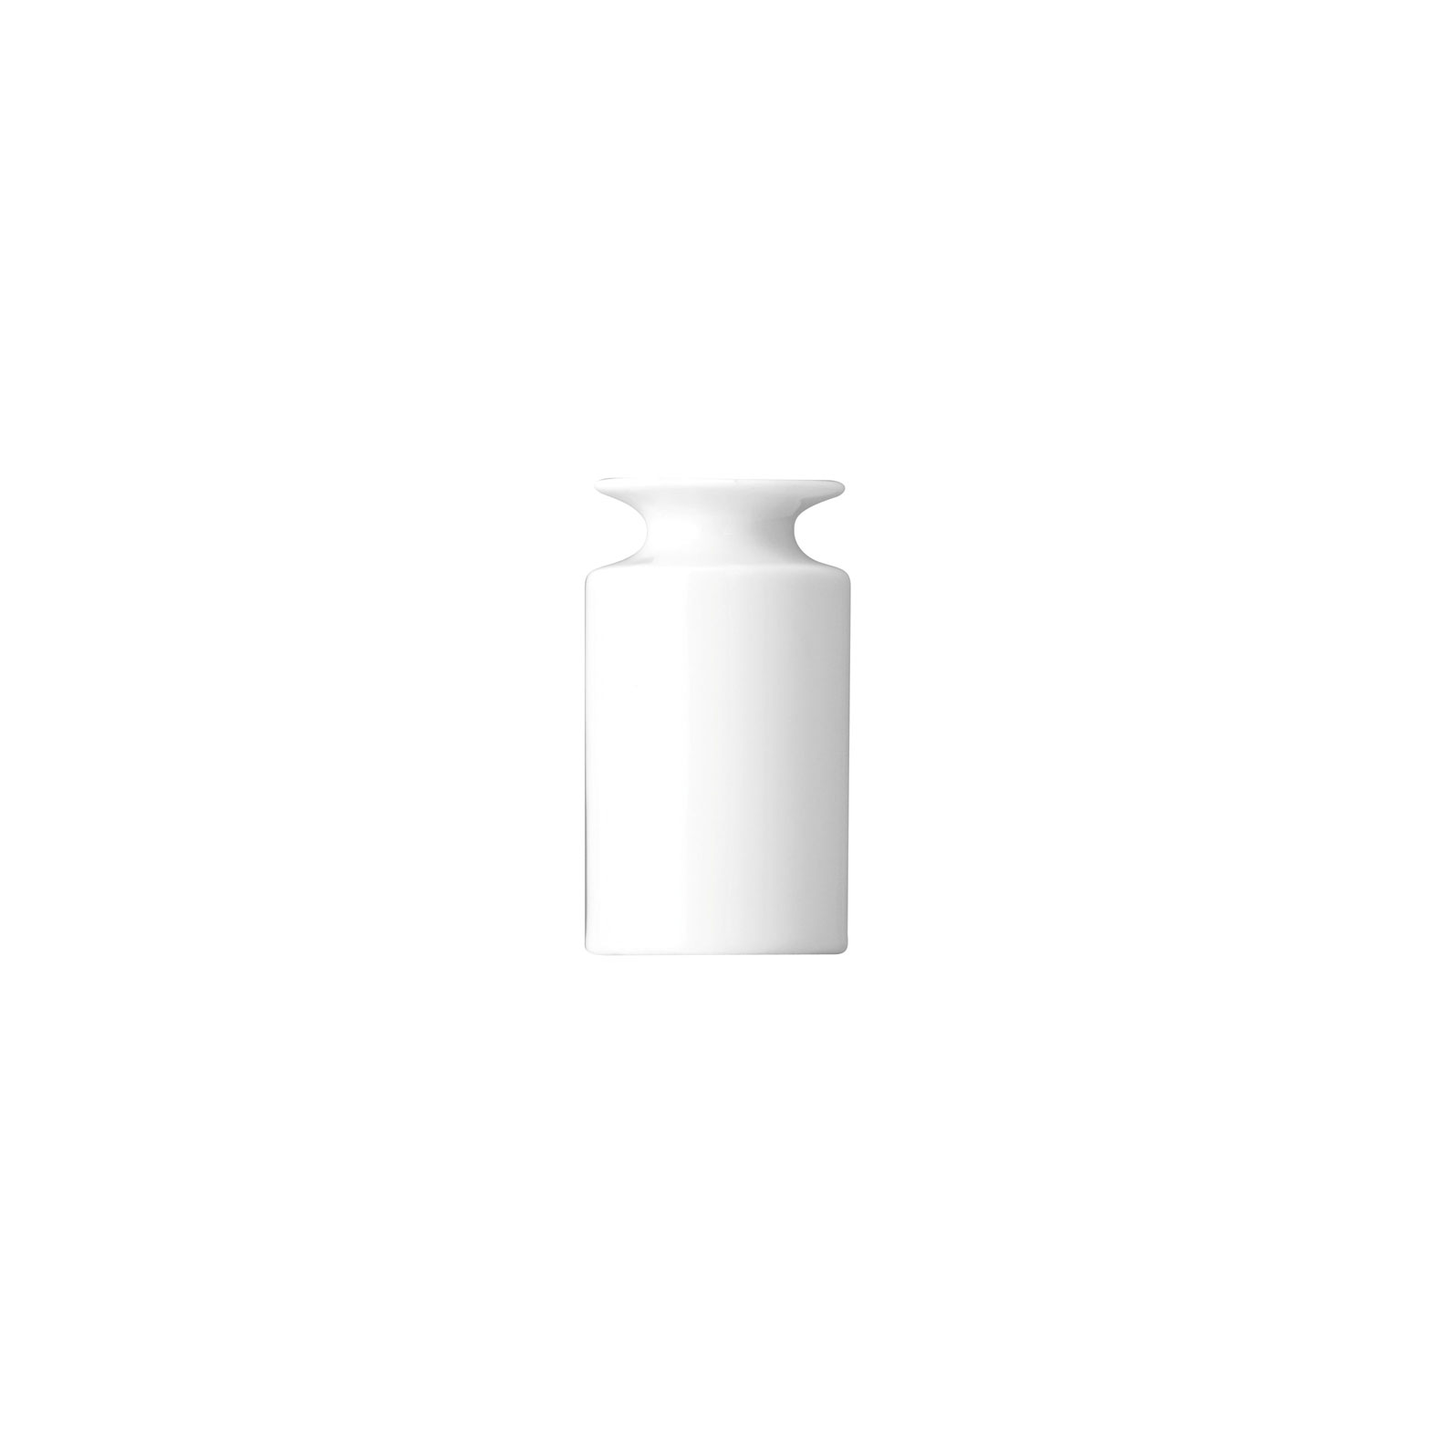 Thomas China Medaillon White Salt Shaker